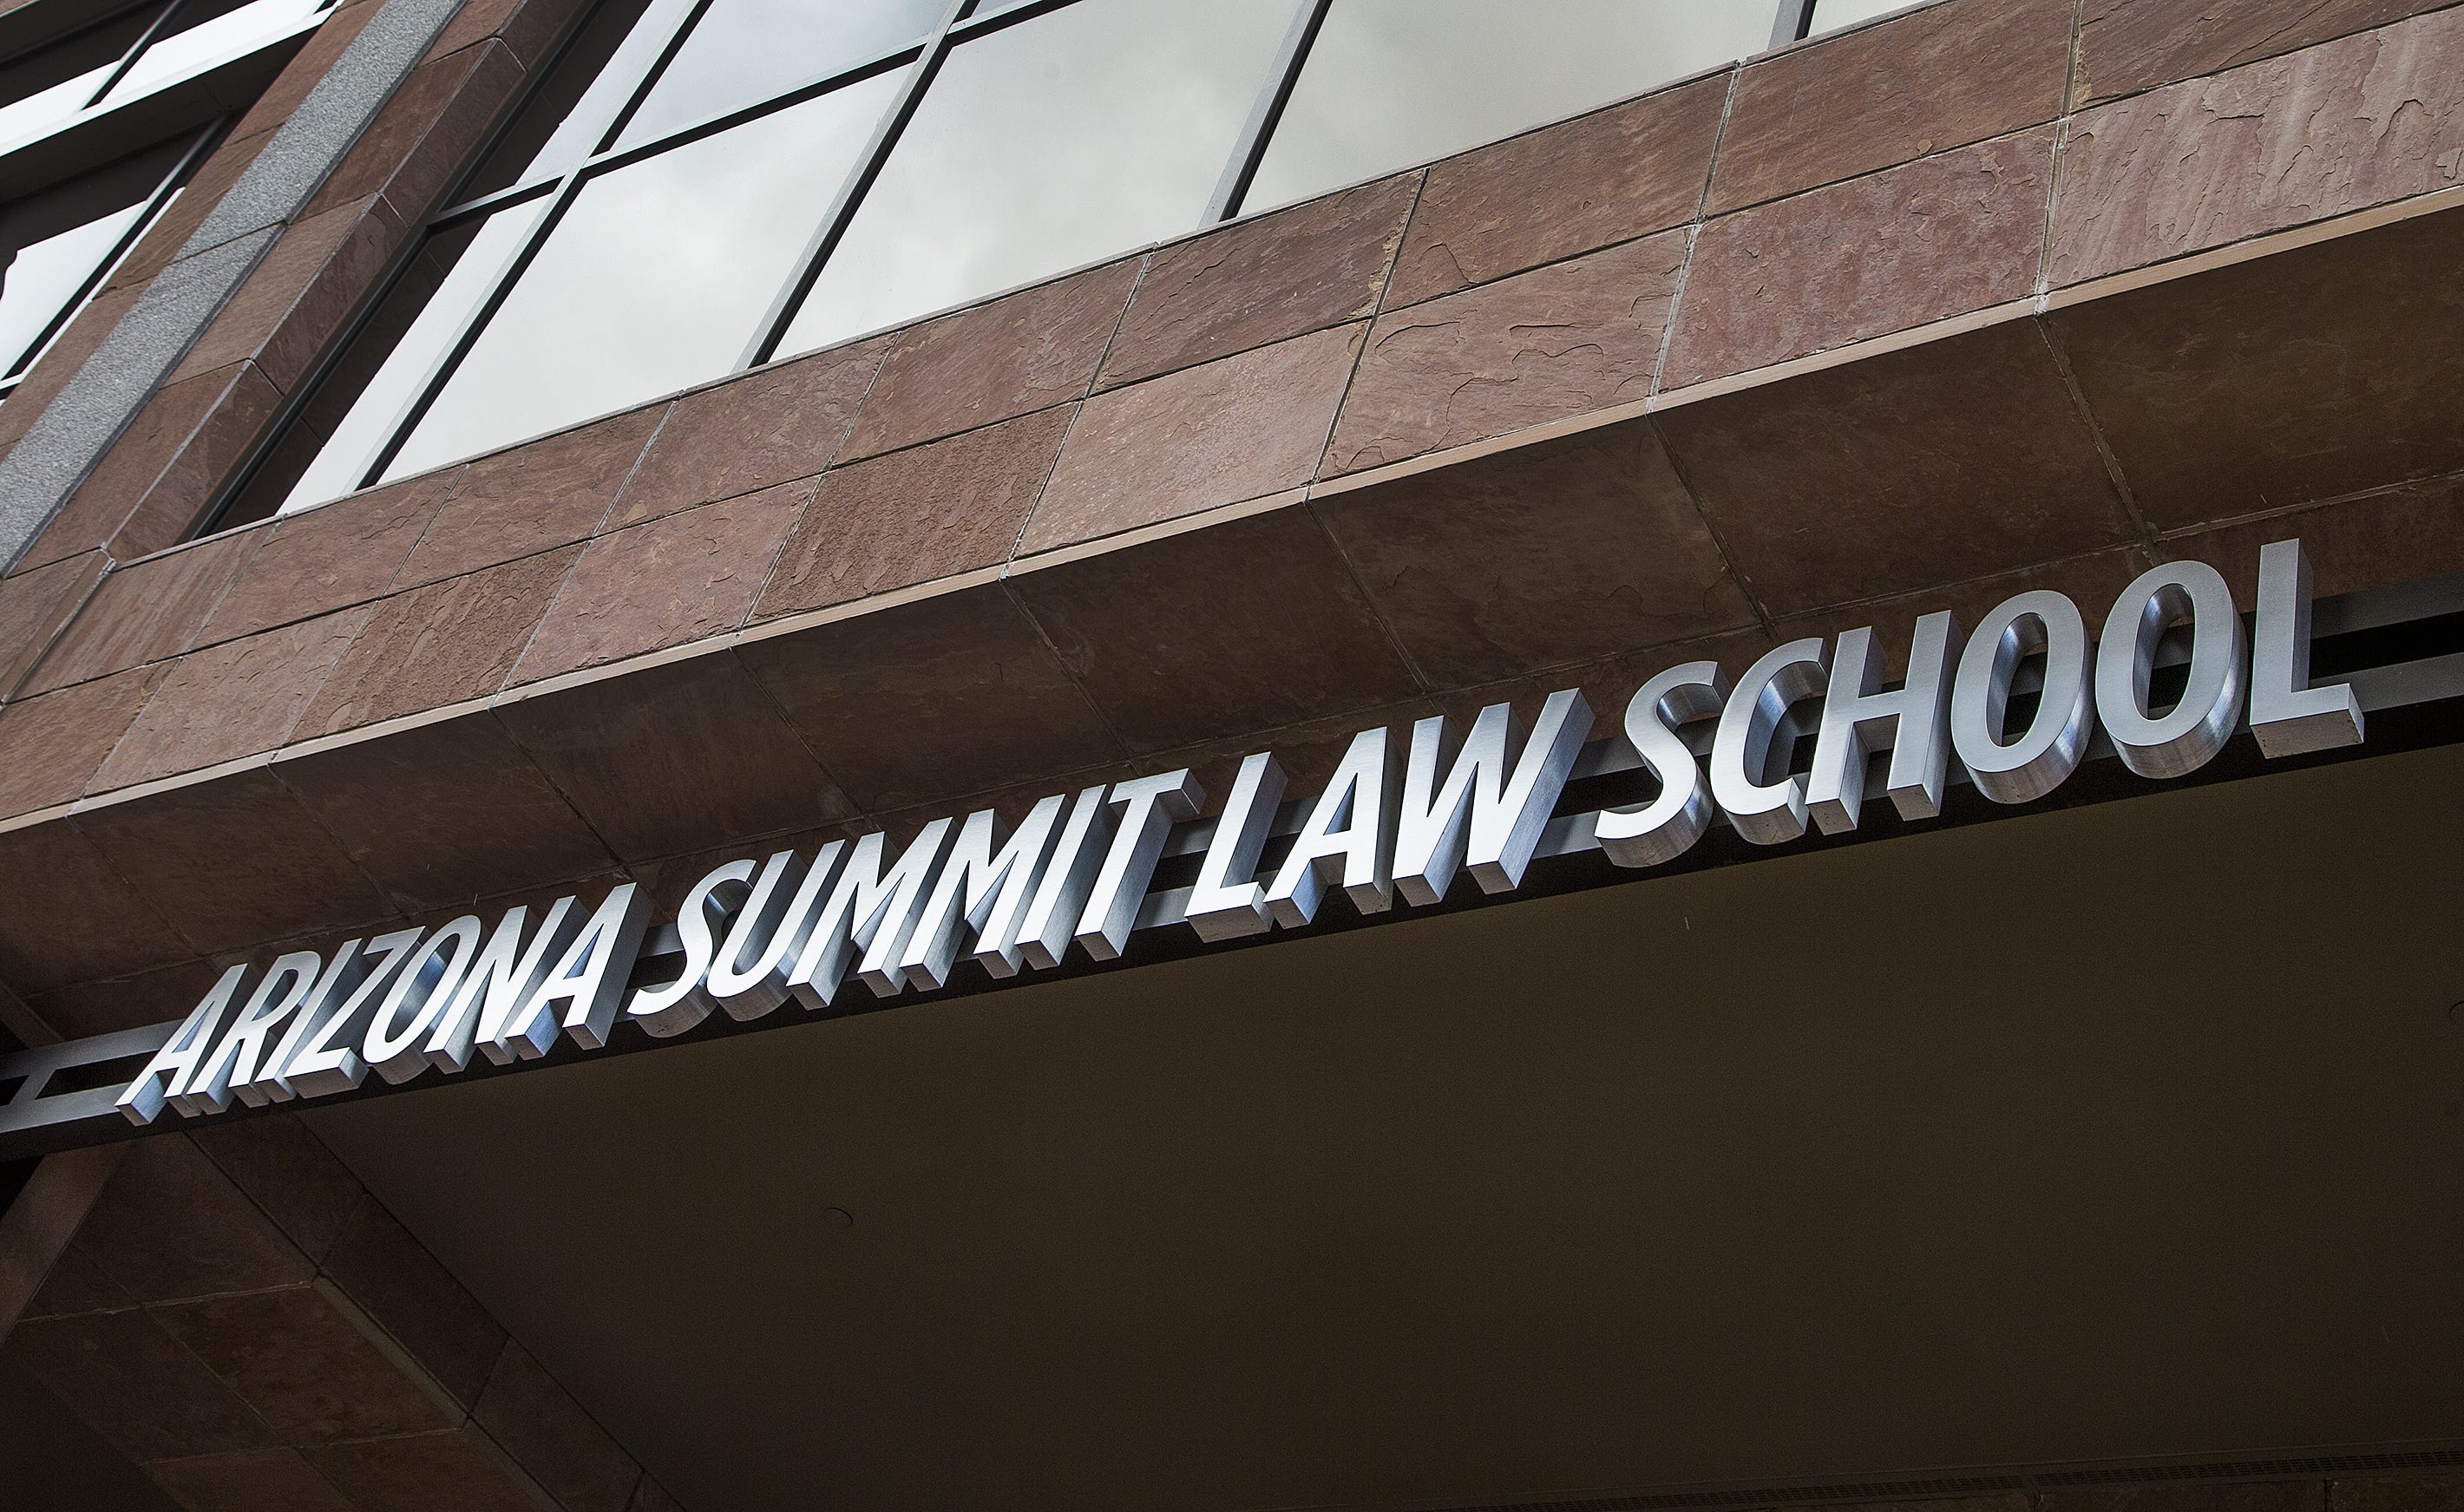 American Bar Association plans to remove Arizona Summit Law School&apos;s accreditation